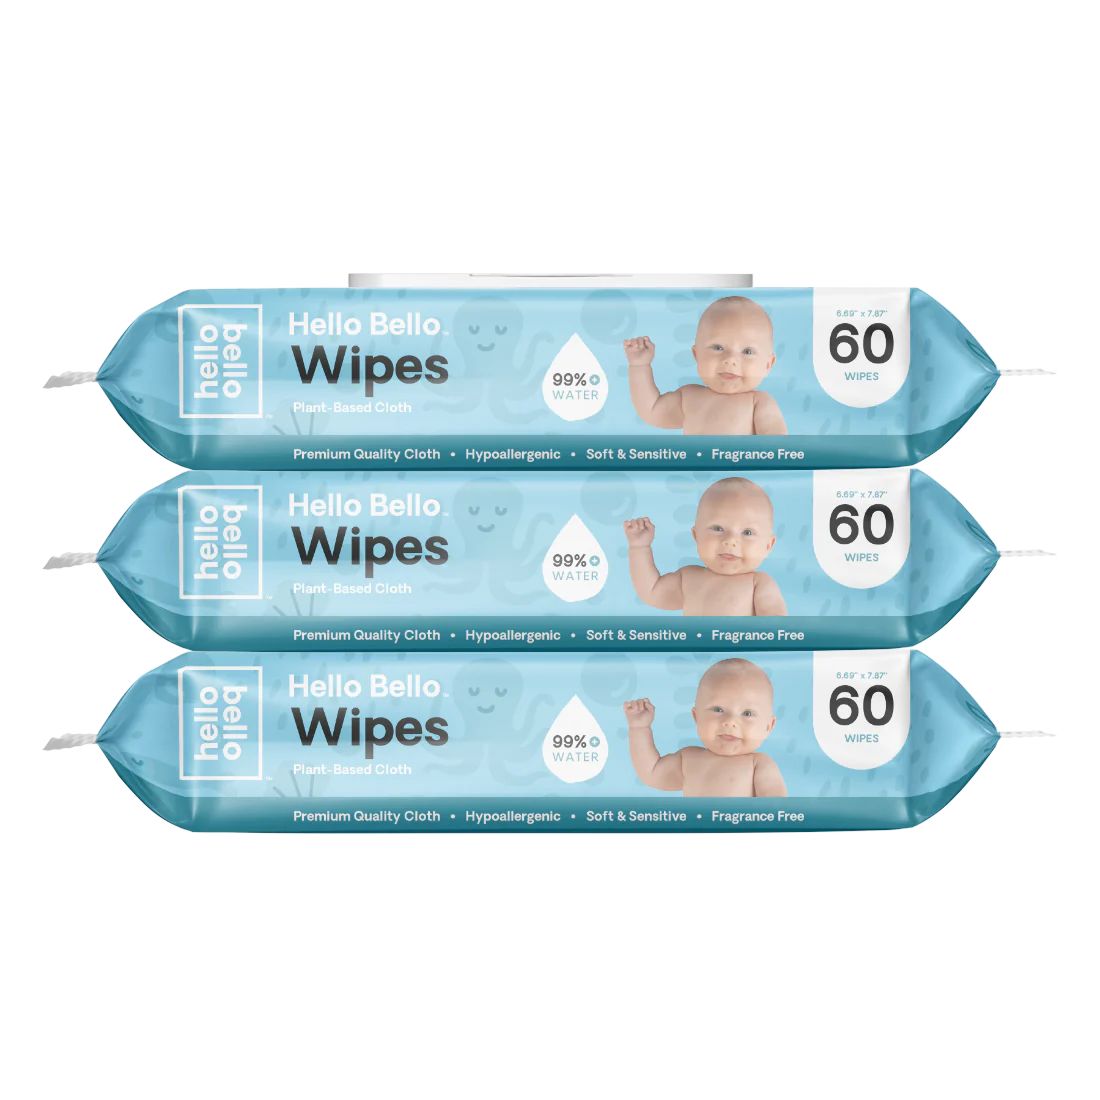 Plant-Based Baby Wipes | Hello Bello